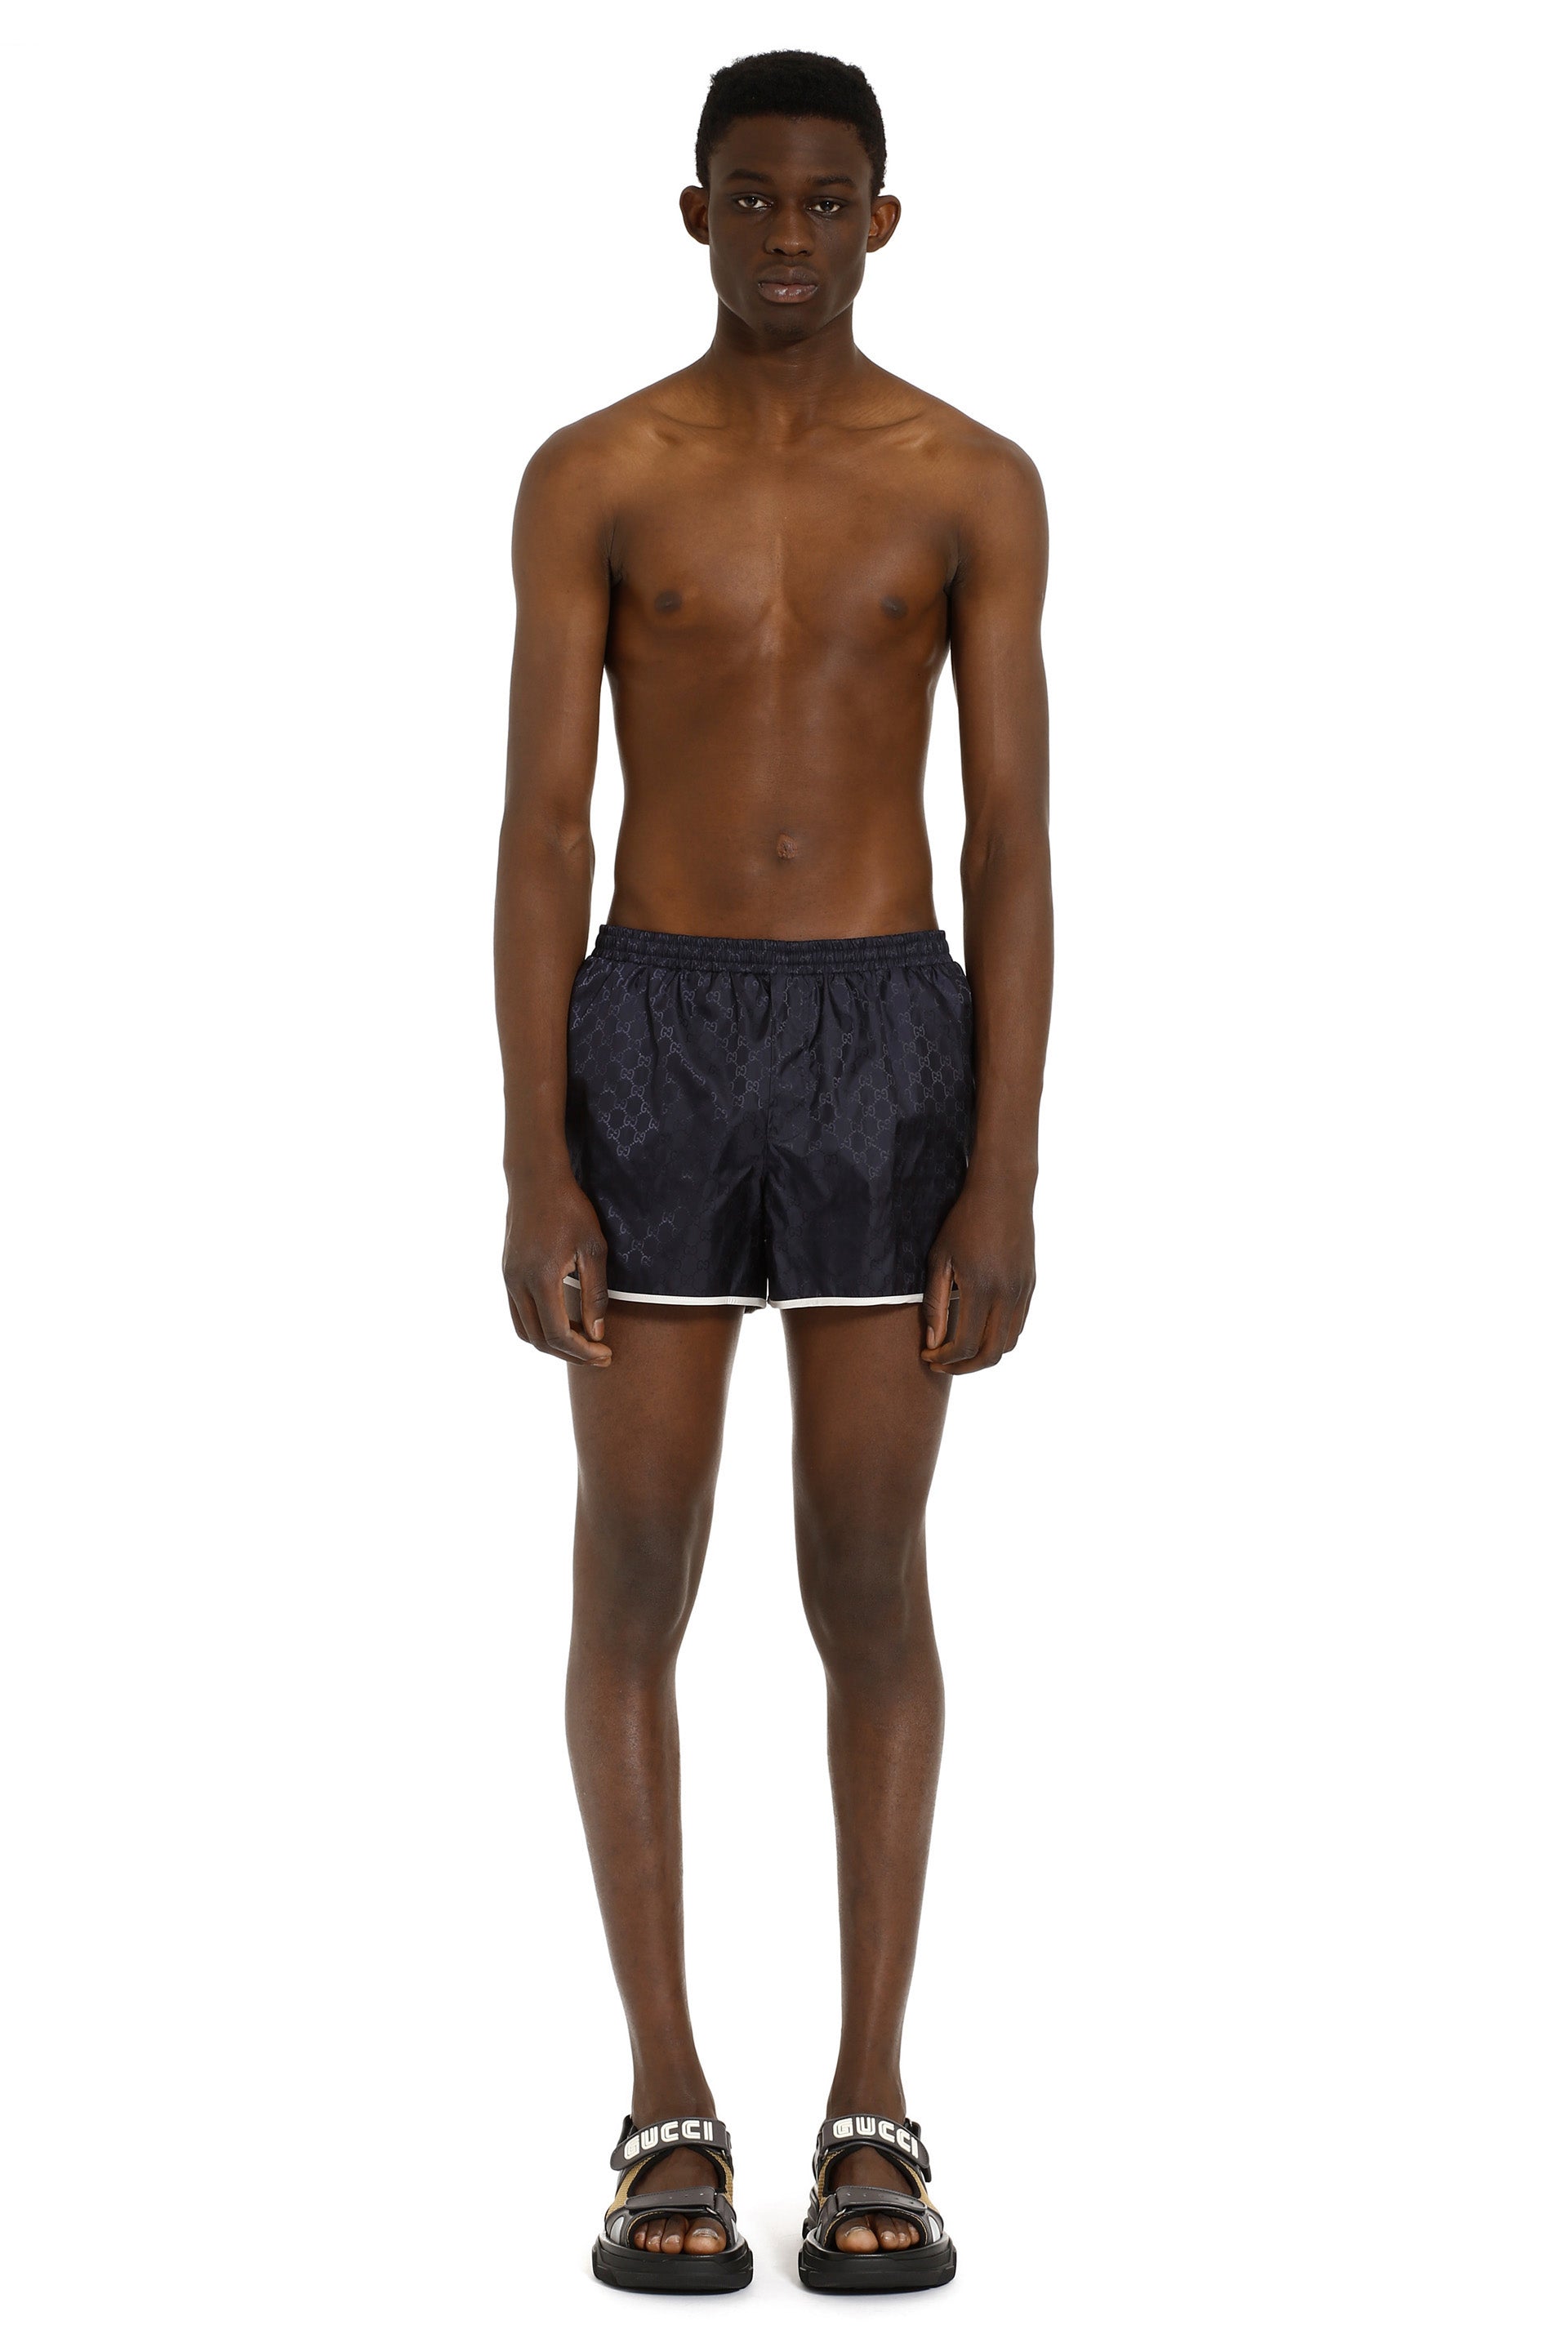 Gucci GG Nylon Swim Shorts - Blue - Boardshorts